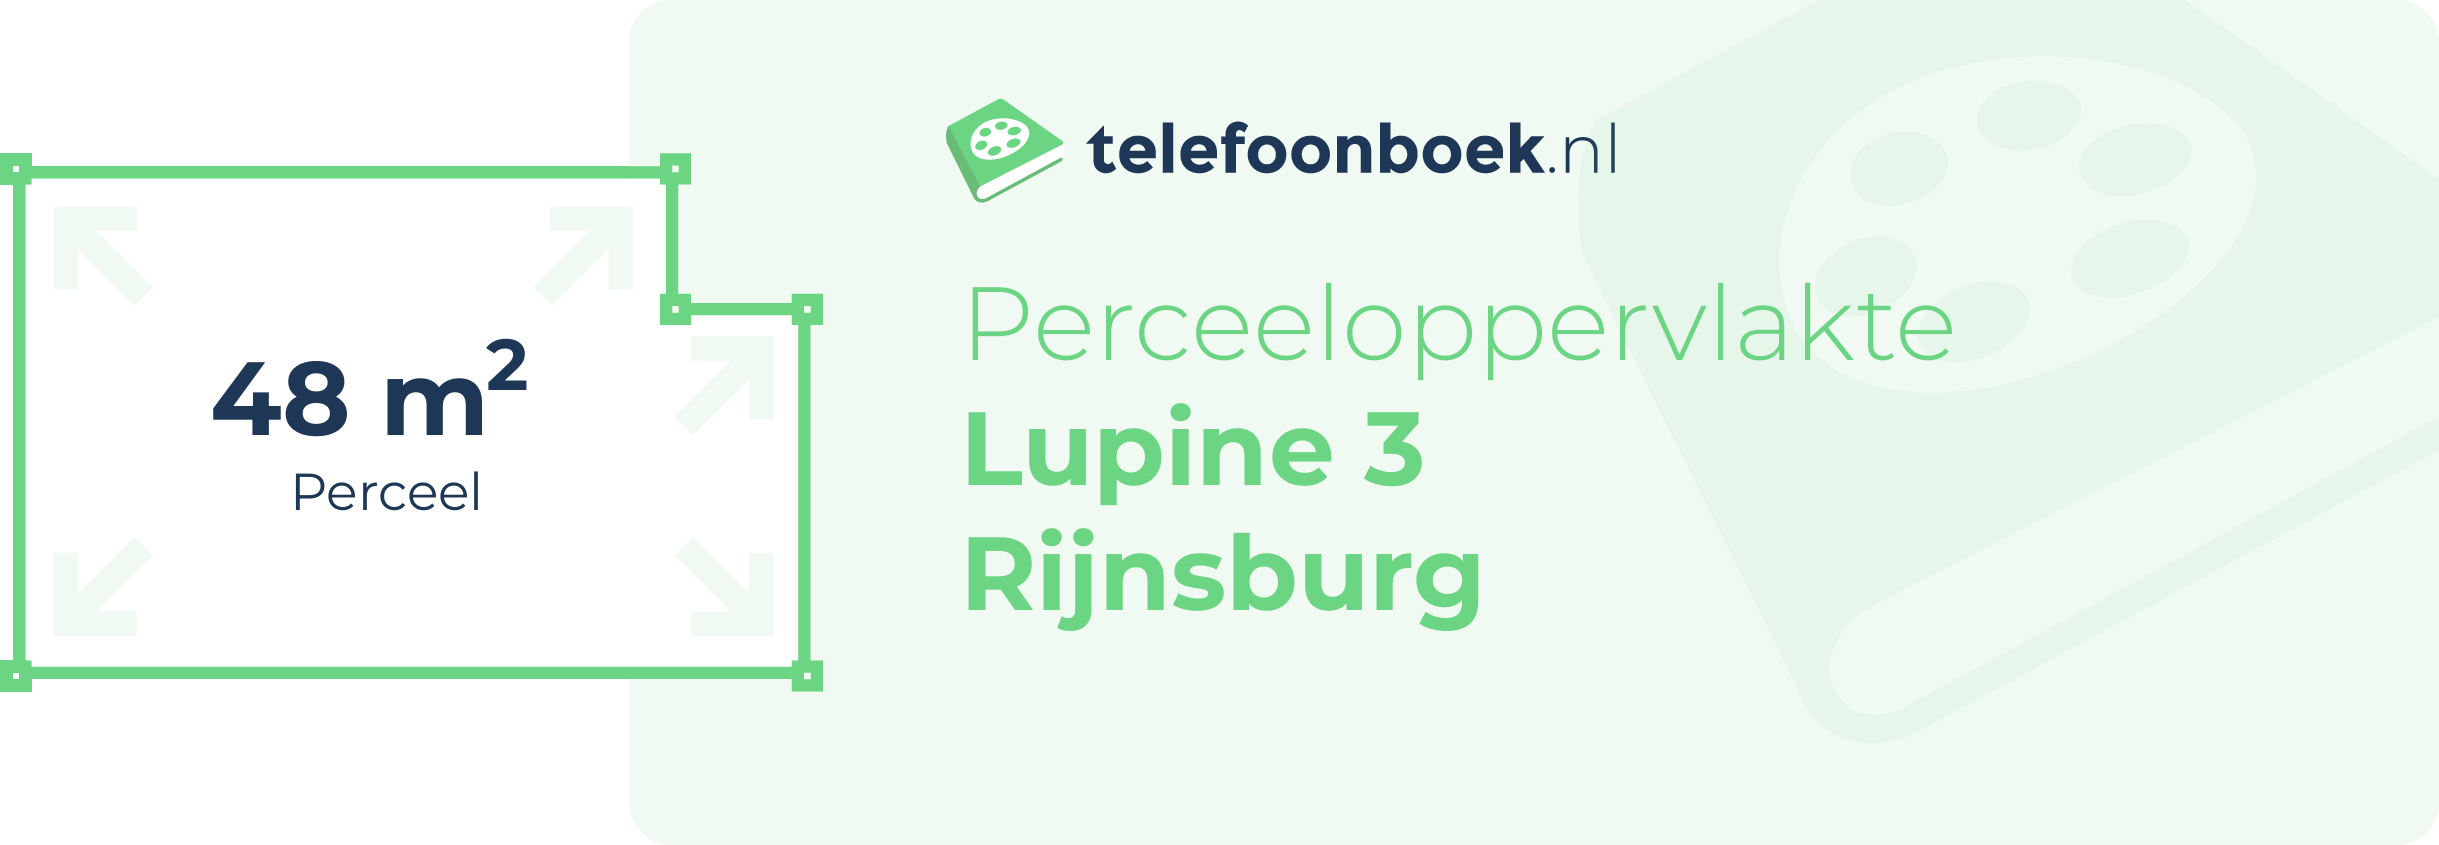 Perceeloppervlakte Lupine 3 Rijnsburg